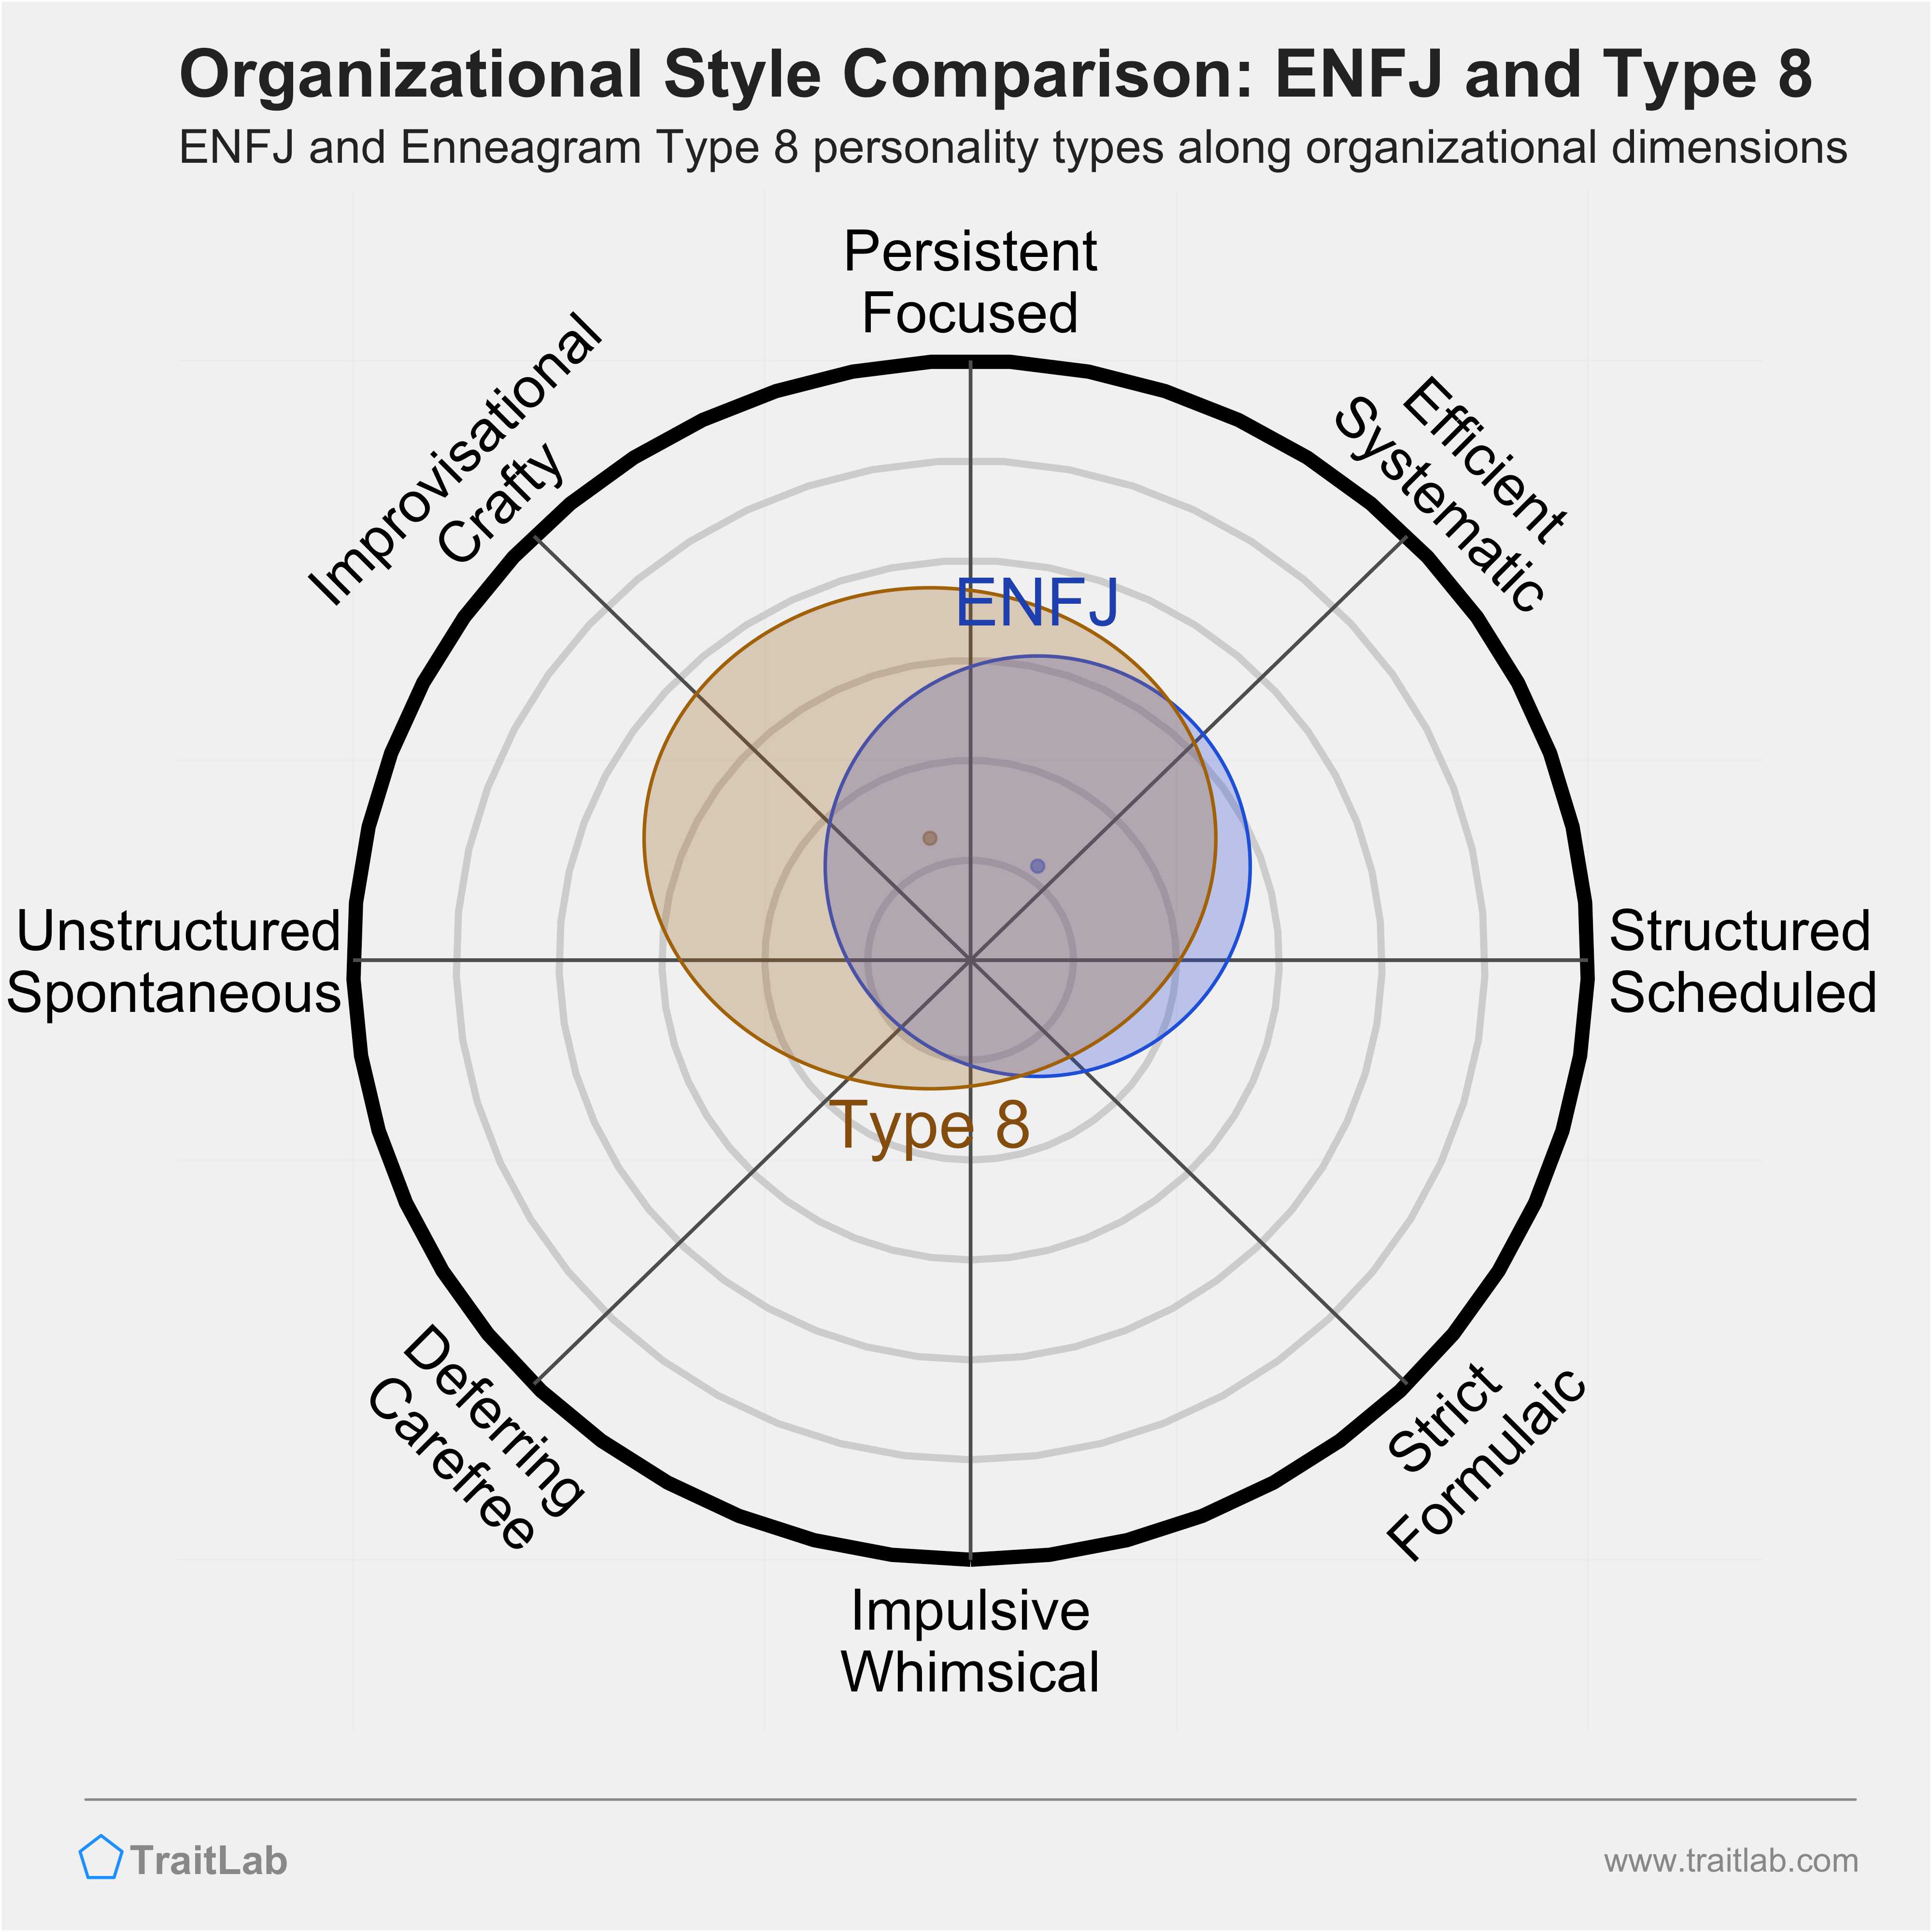 ENFJ and Type 8 comparison across organizational dimensions